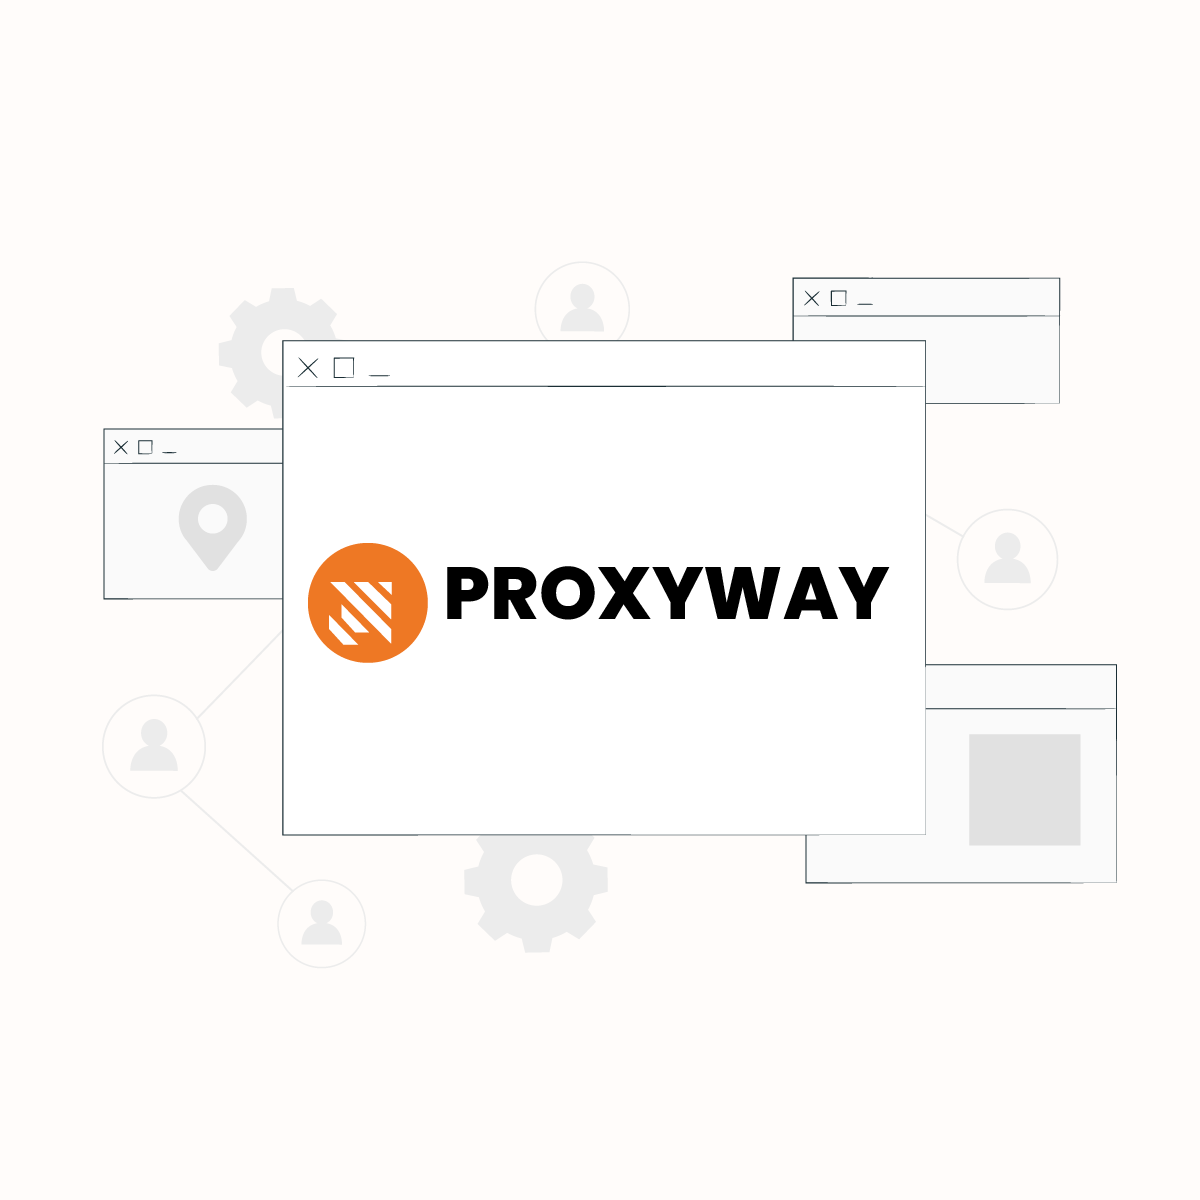 Proxy Research: NetNut’s Strengths in the Proxy Market